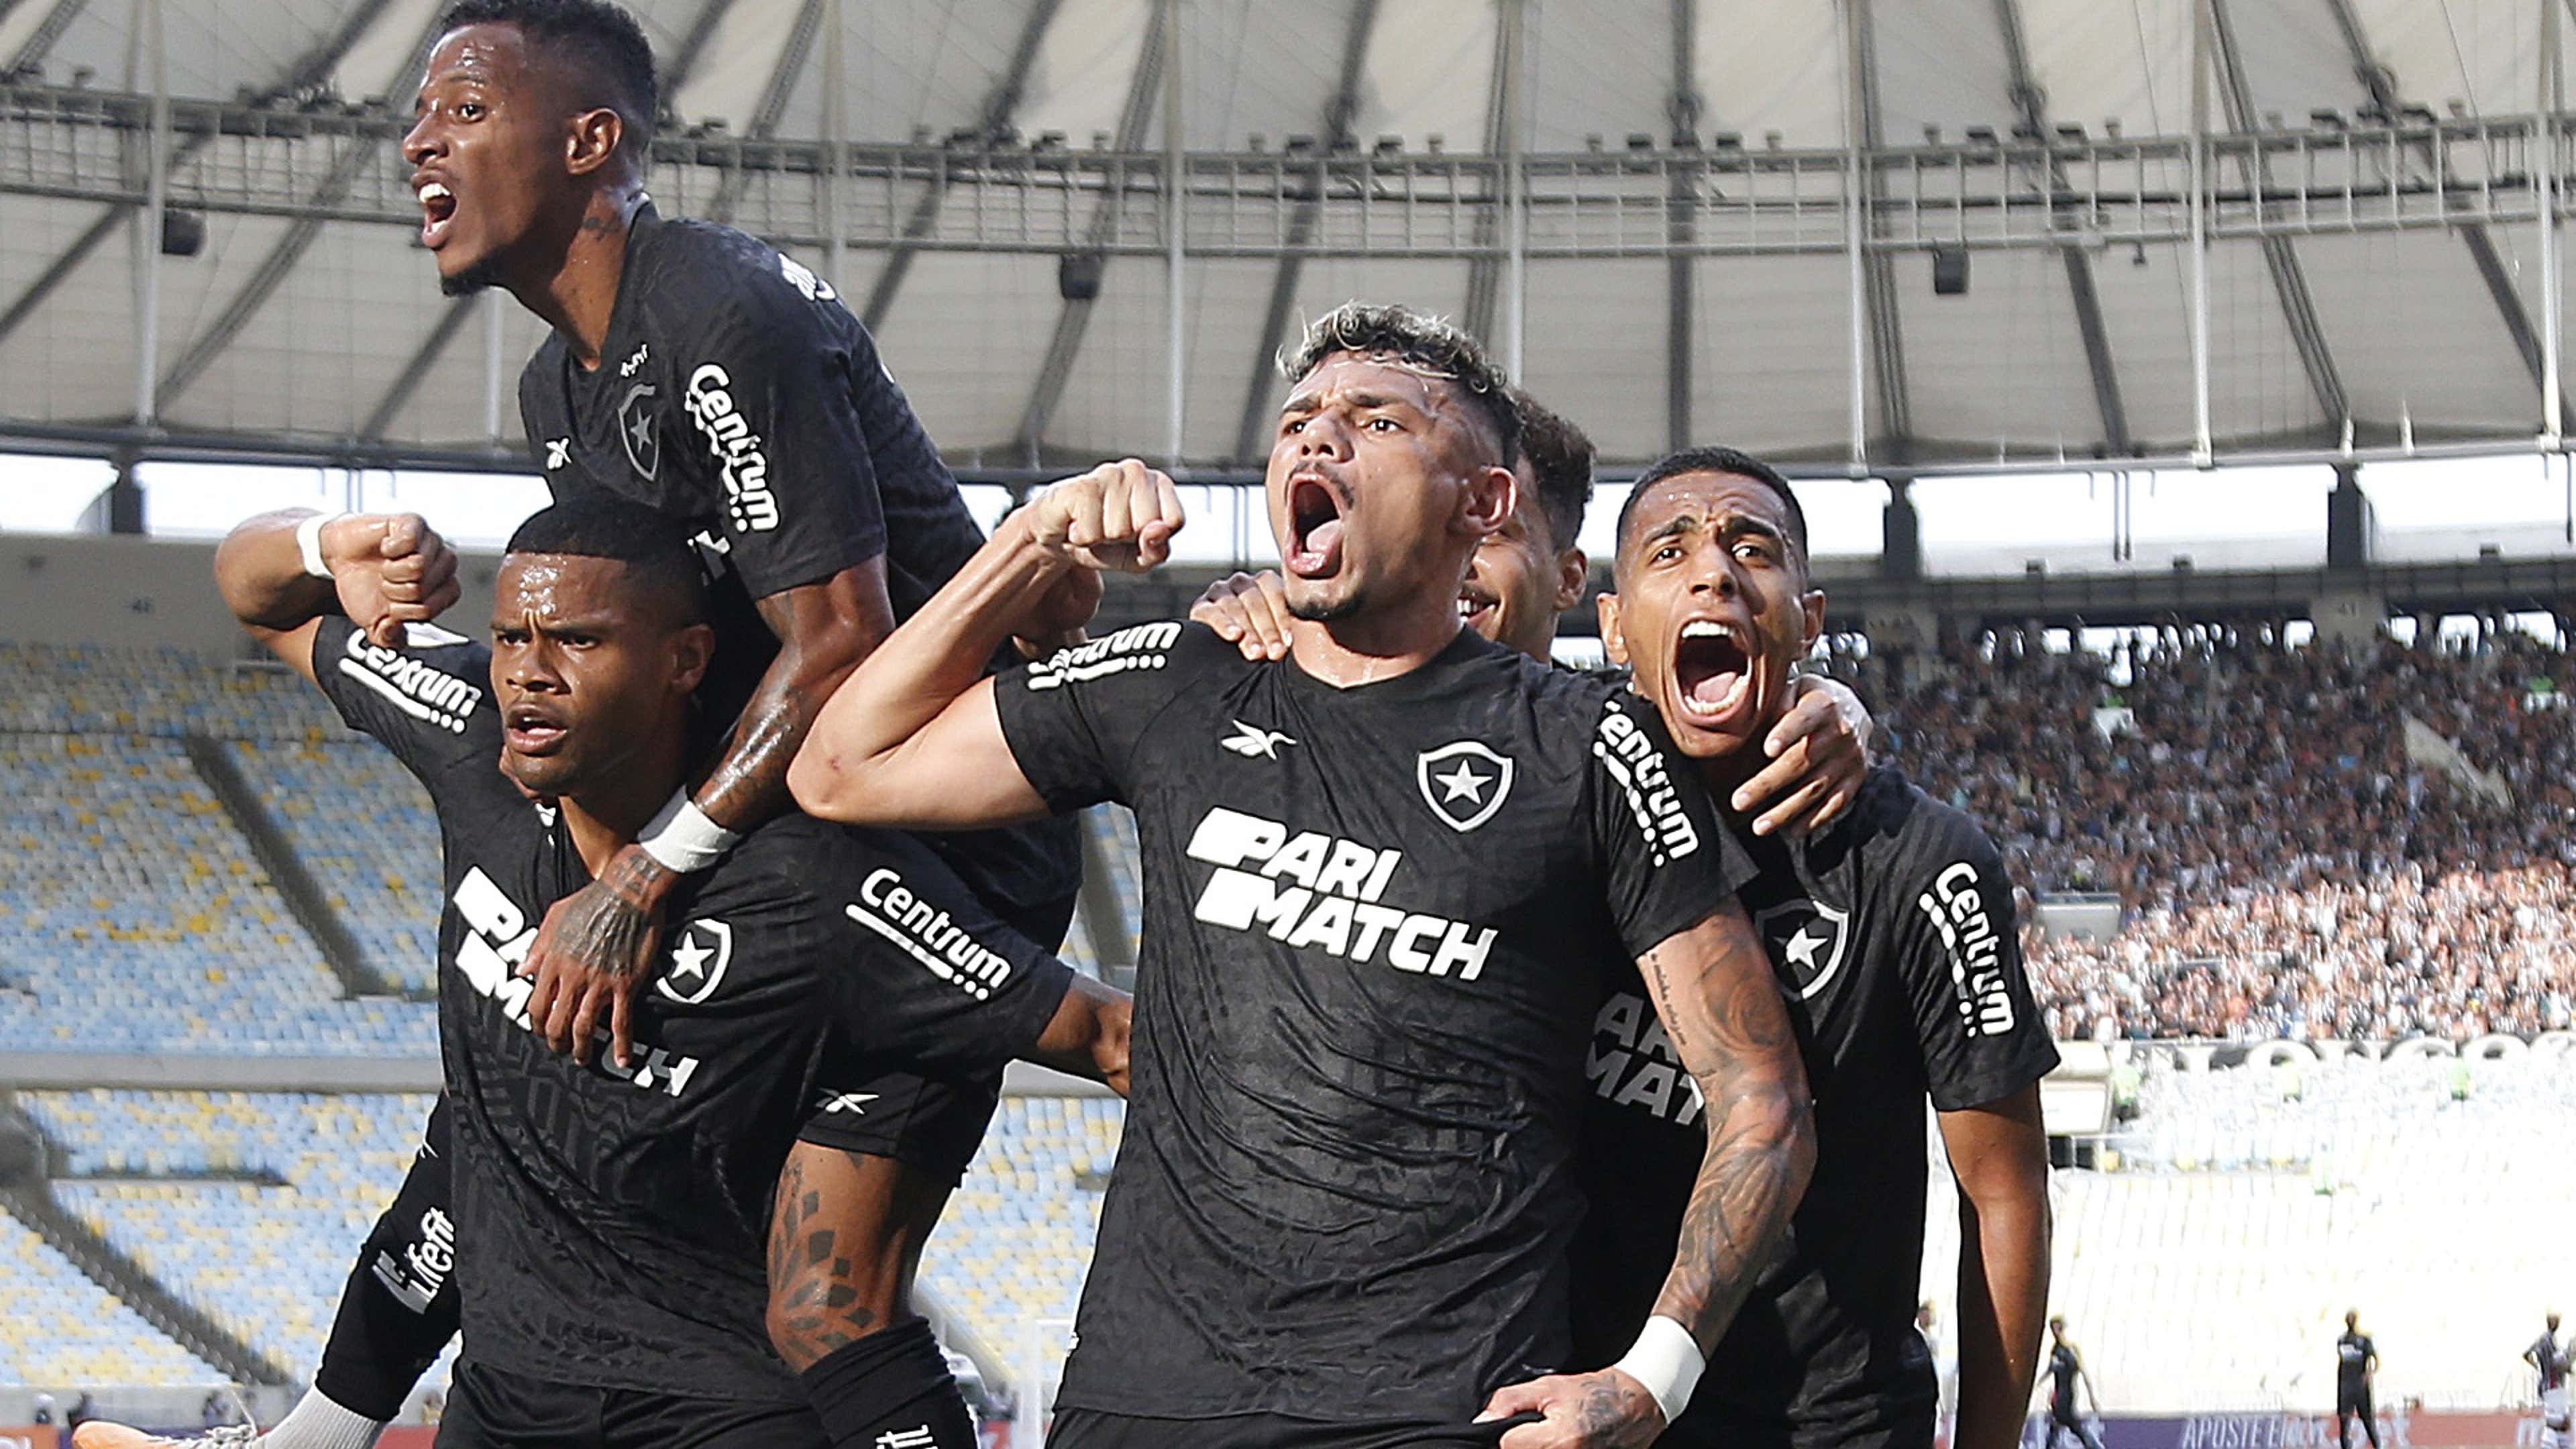 Grêmio vs Ypiranga: A Clash of Football Rivals